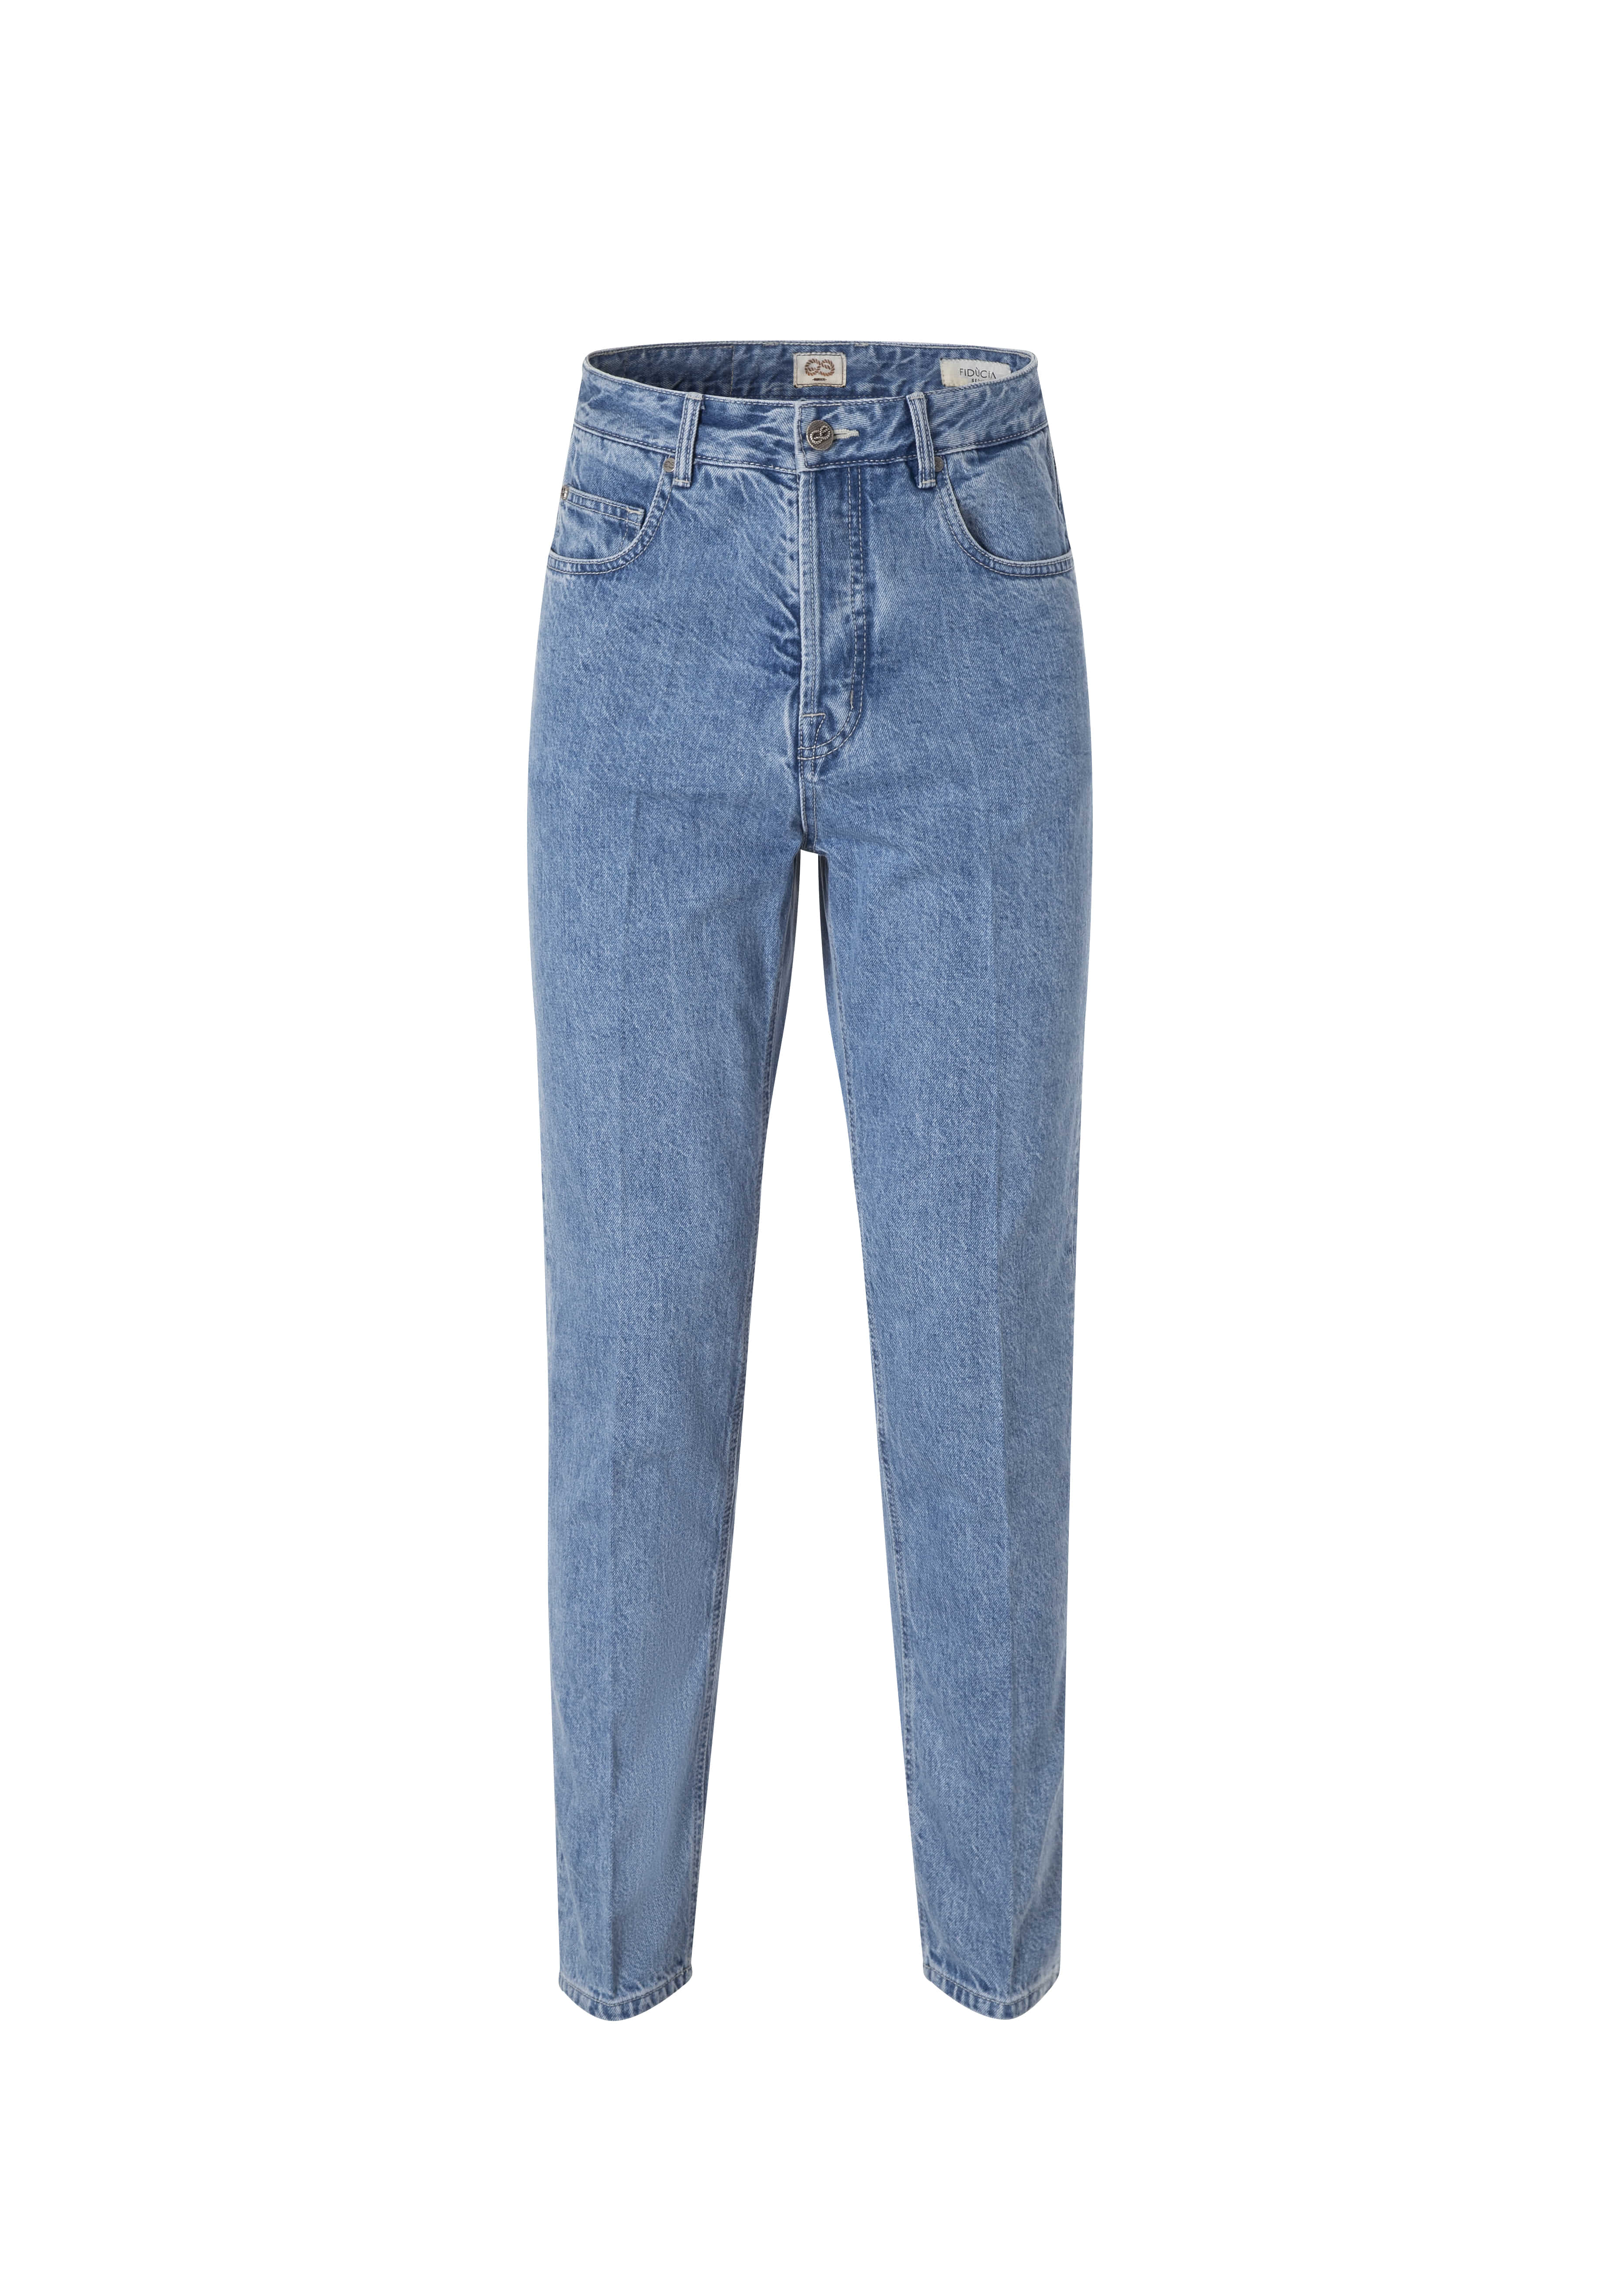 [FIDUCIA] Ombelico light blue jean